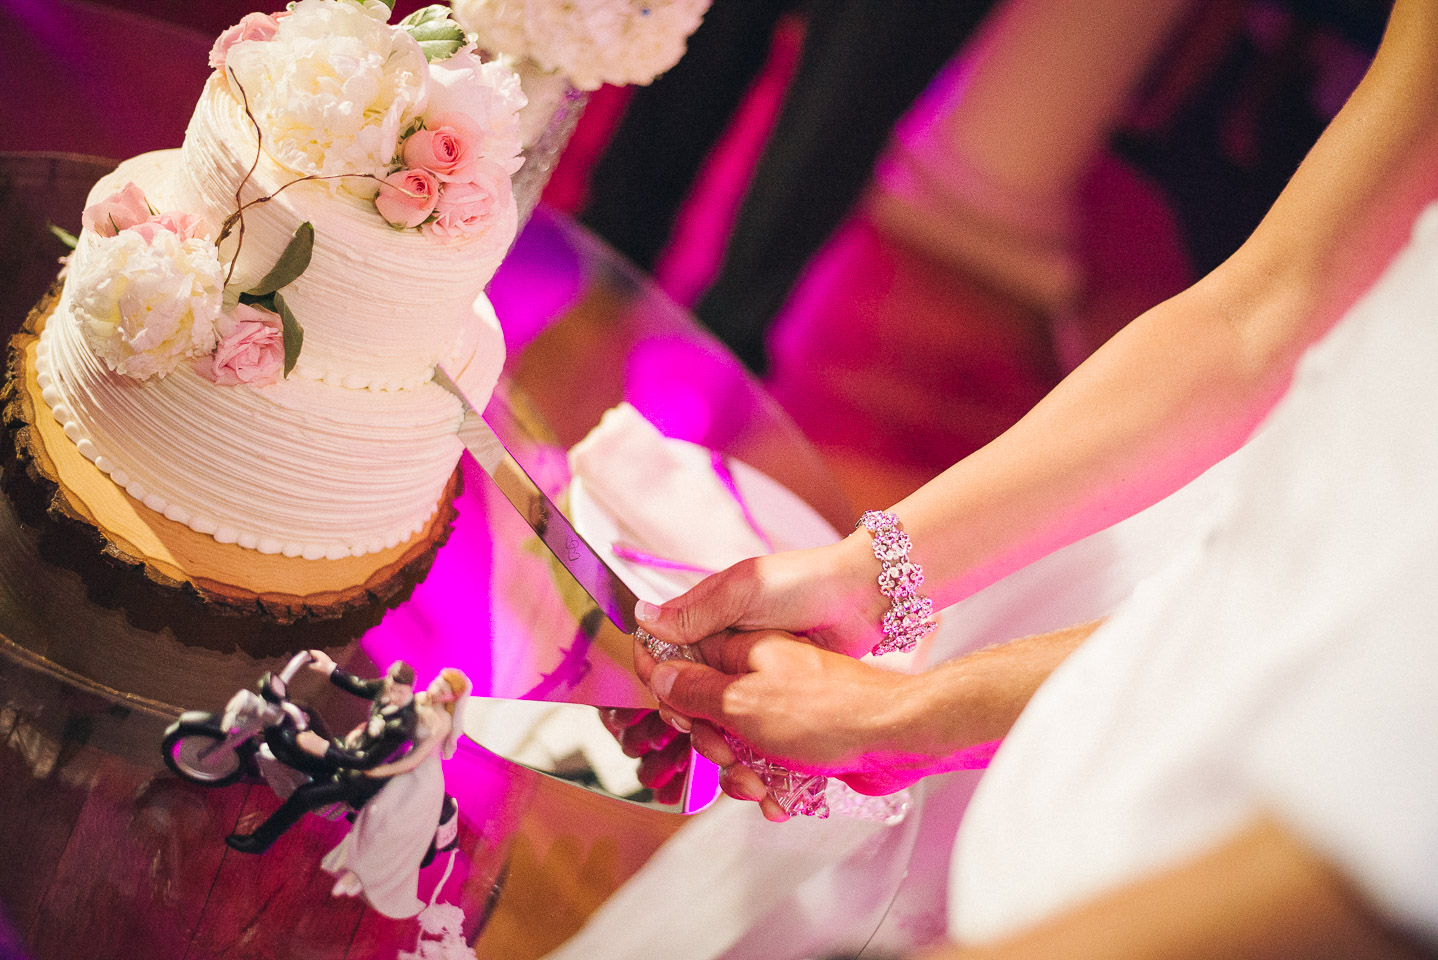 NH Wedding Photographer: cake cutting